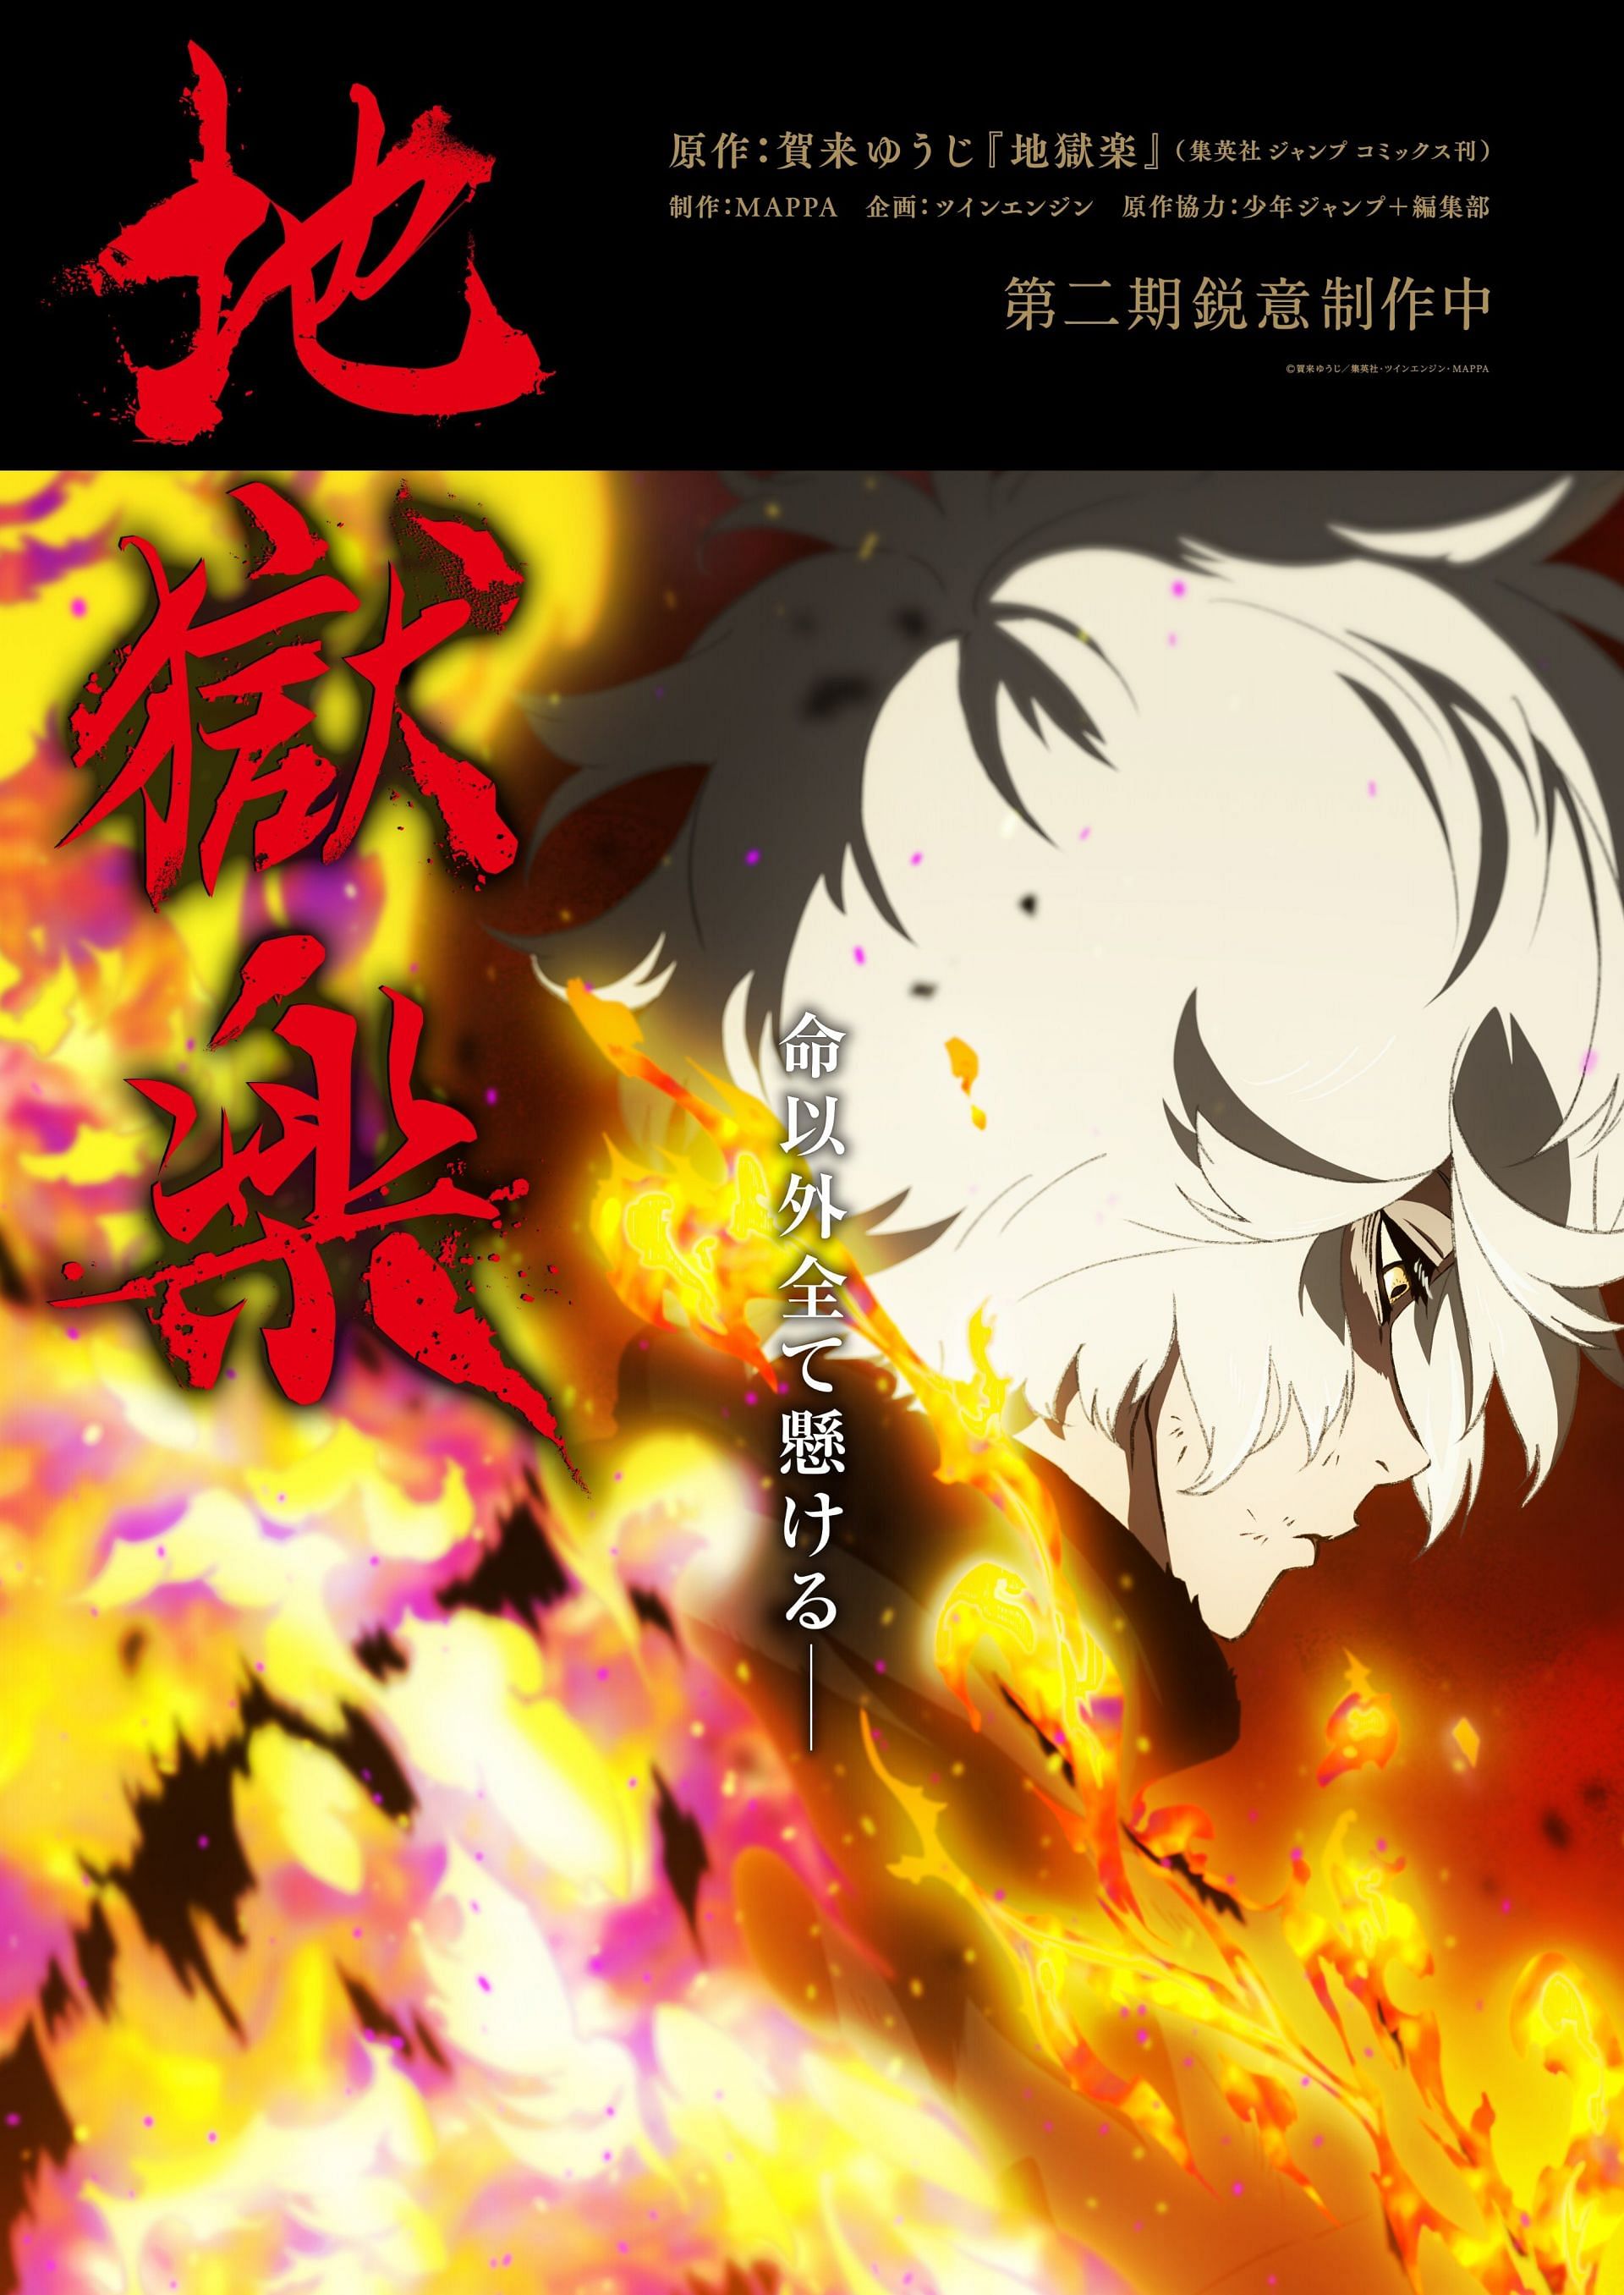 Hell's Paradise: Jigokuraku Stage Play Reveals Promo Video, Visual, Main  Cast, February 2023 Premiere - News - Anime News Network